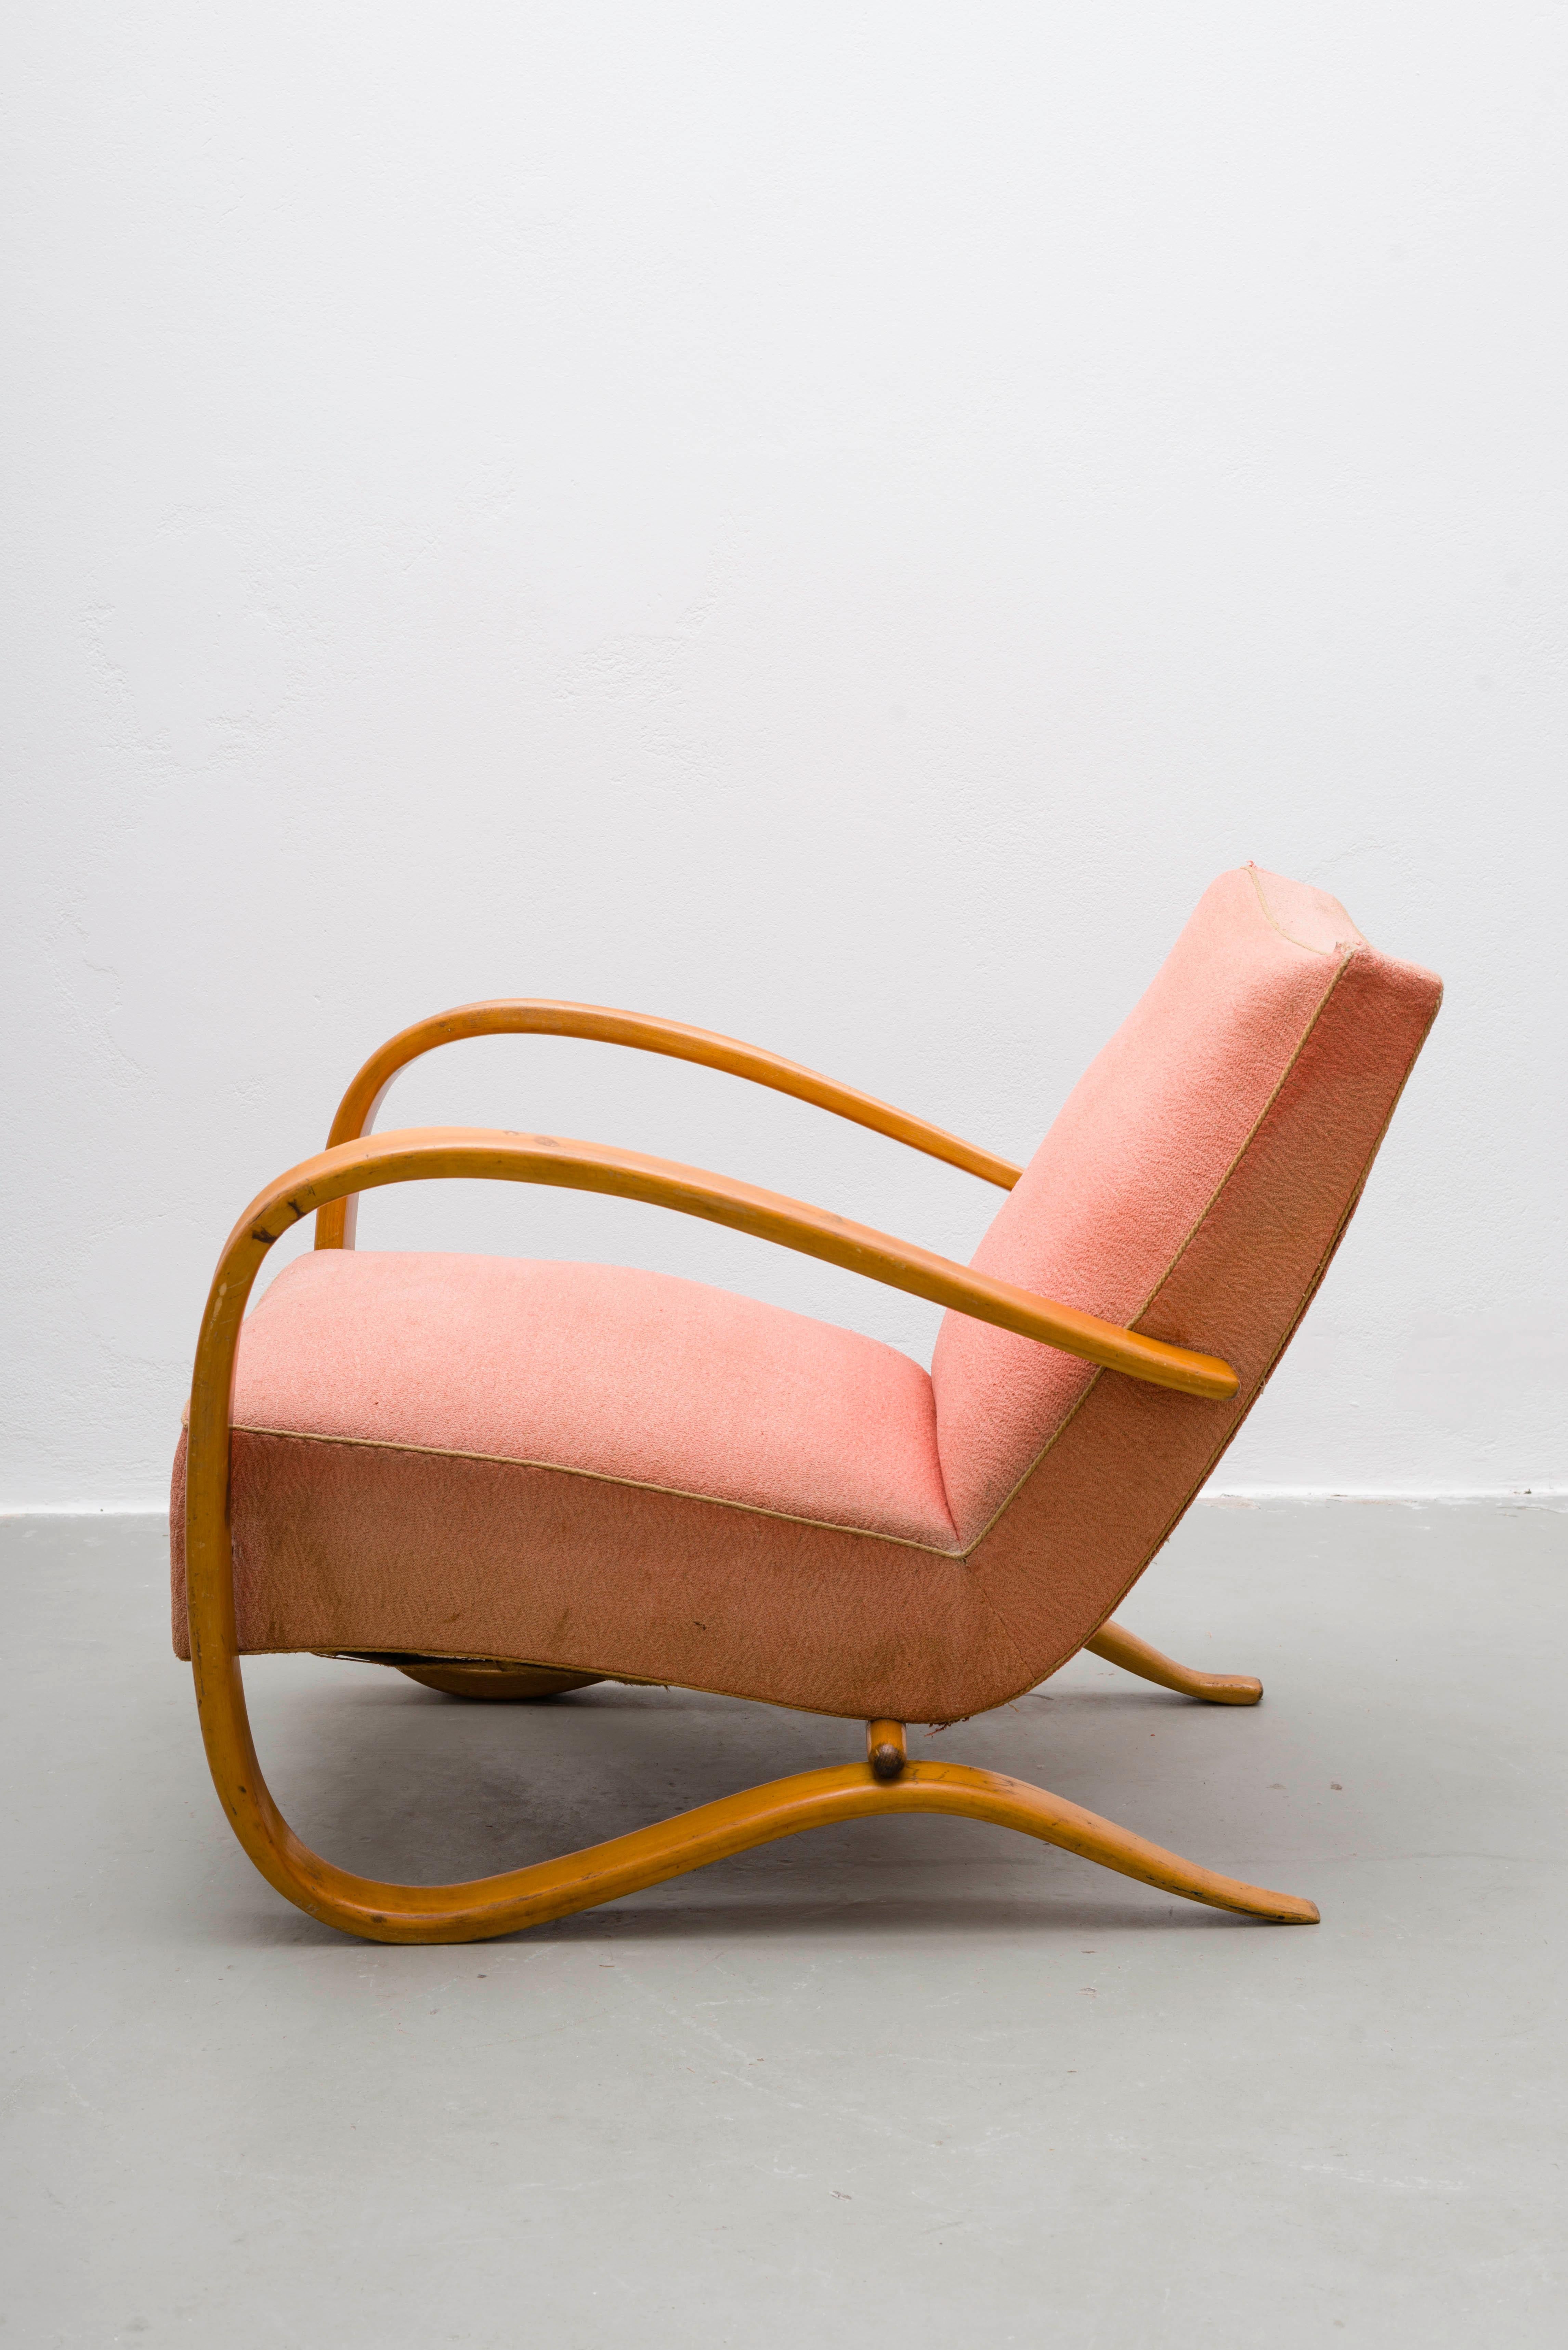 Streamline Chair H 269 by Jindrich Halabala for Spojene Up Závody, 1930s 1